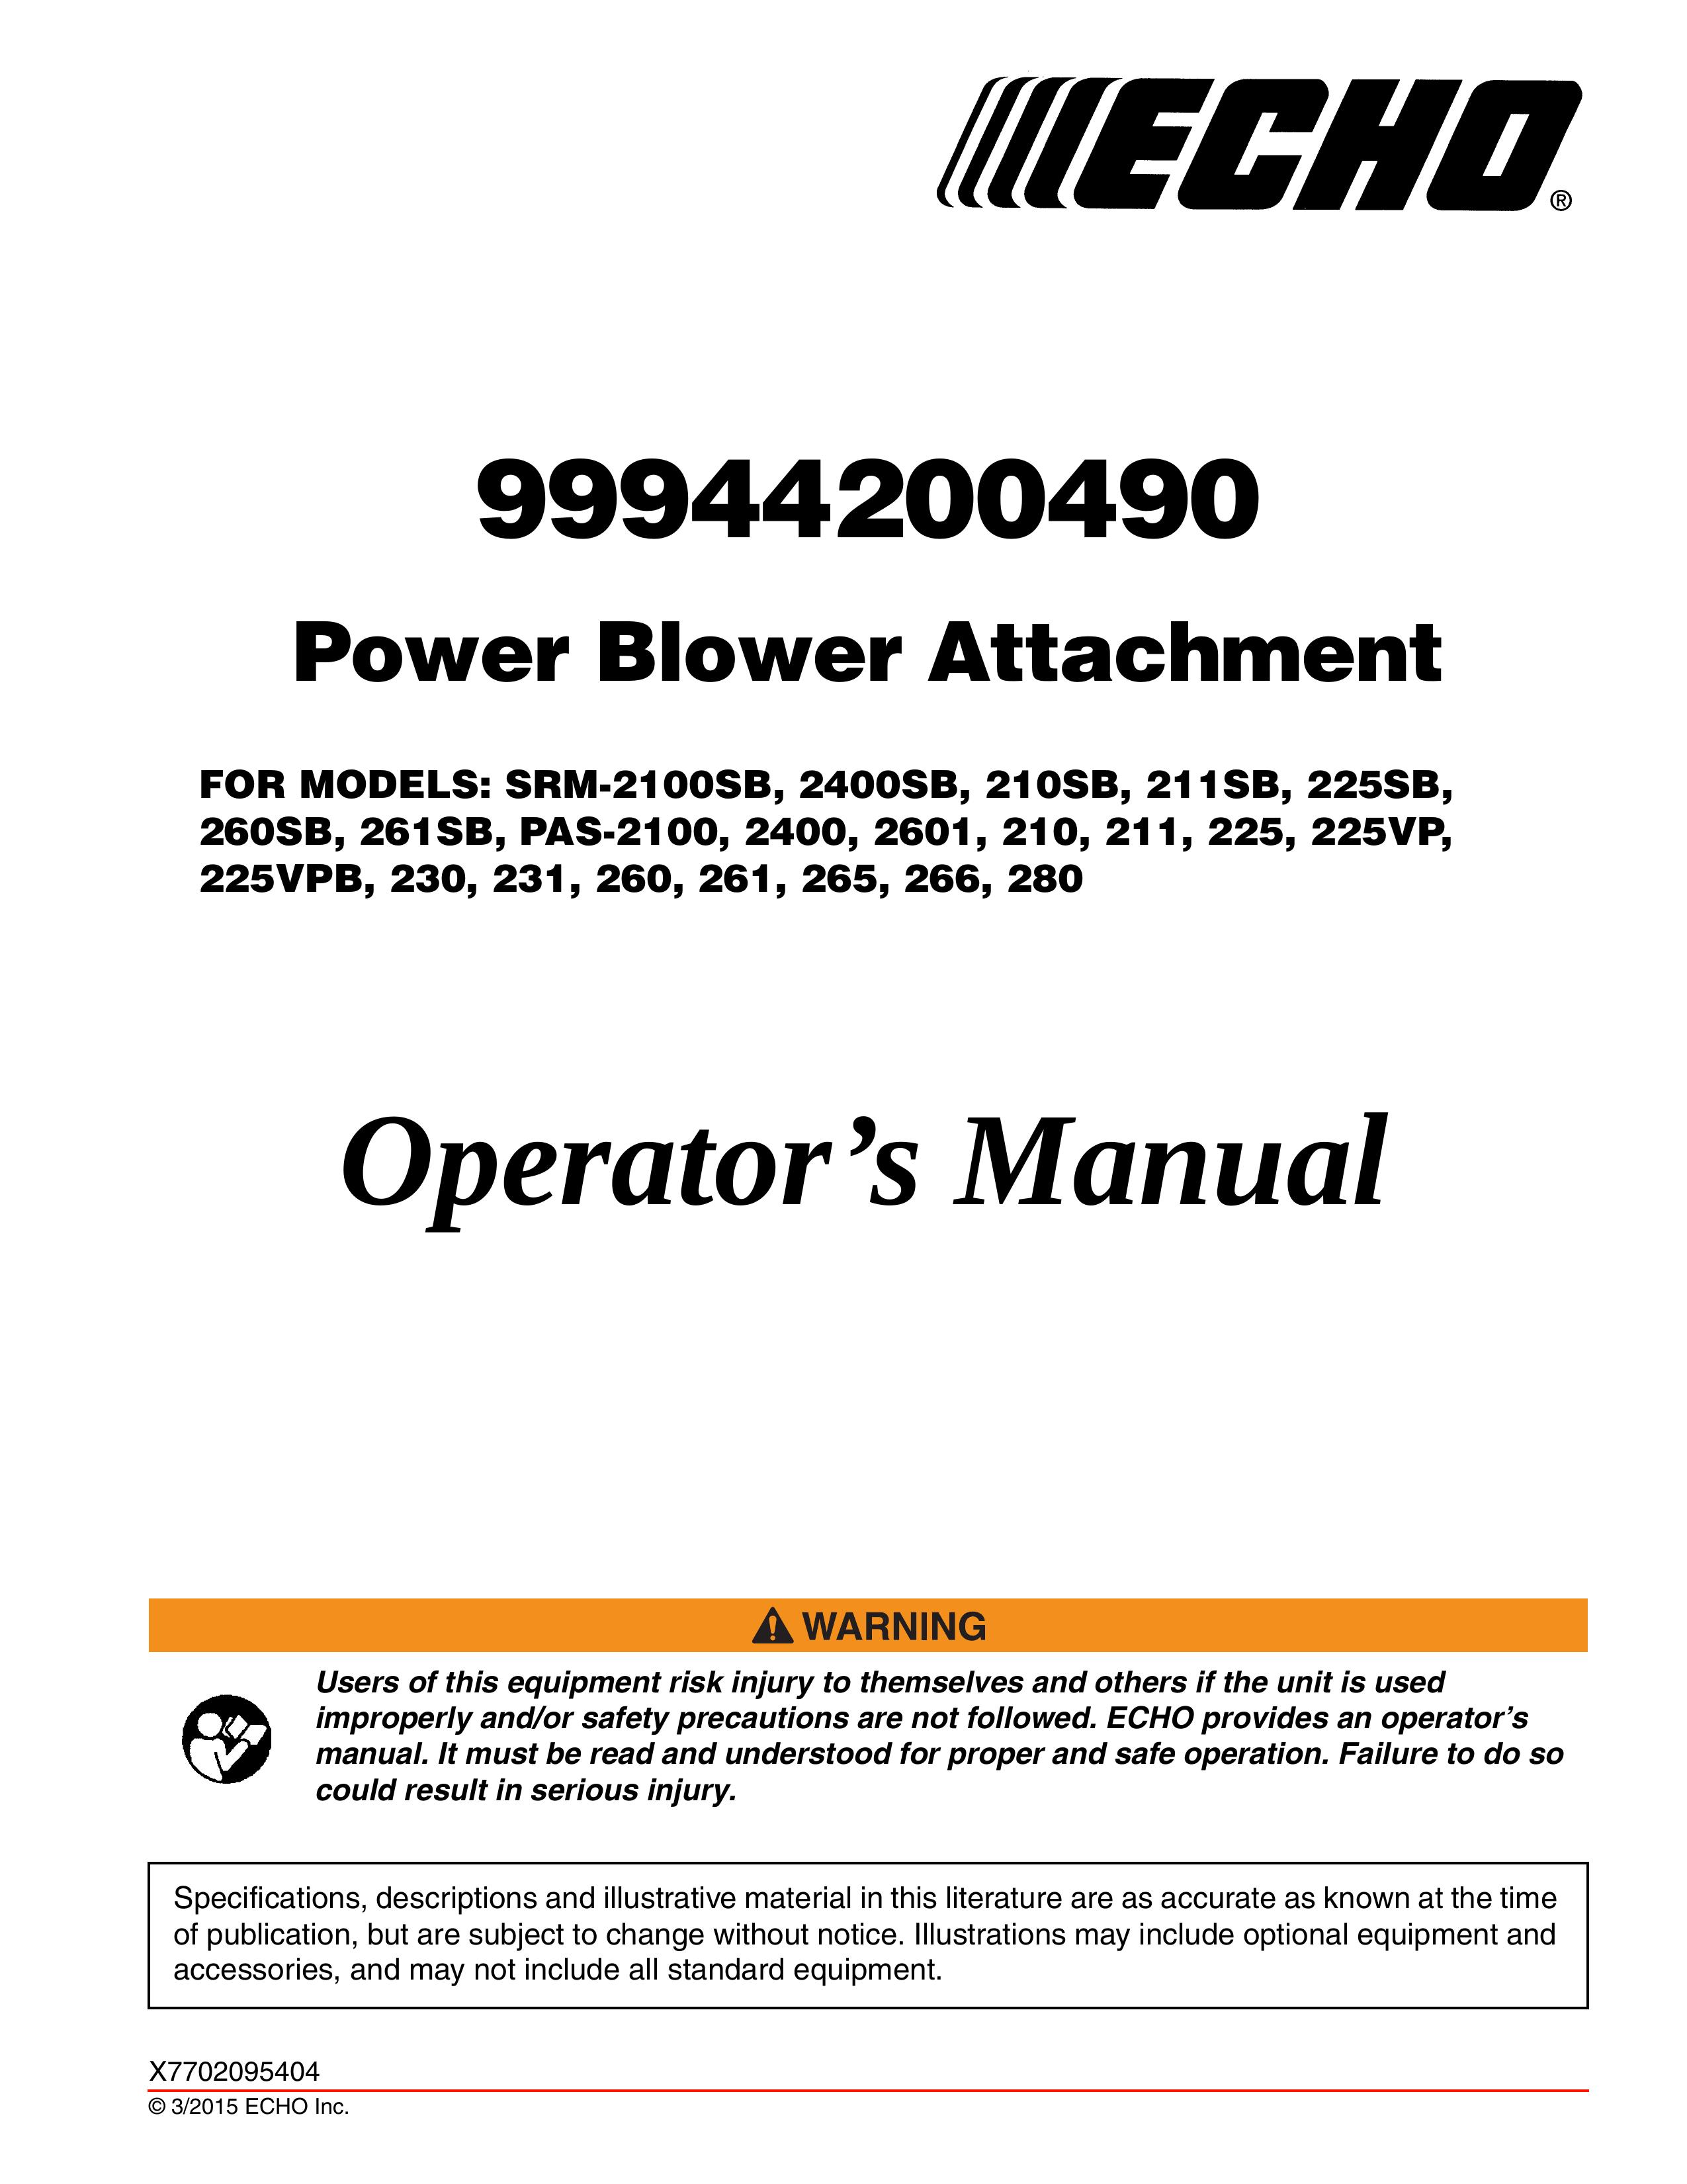 Echo 261 Blower User Manual